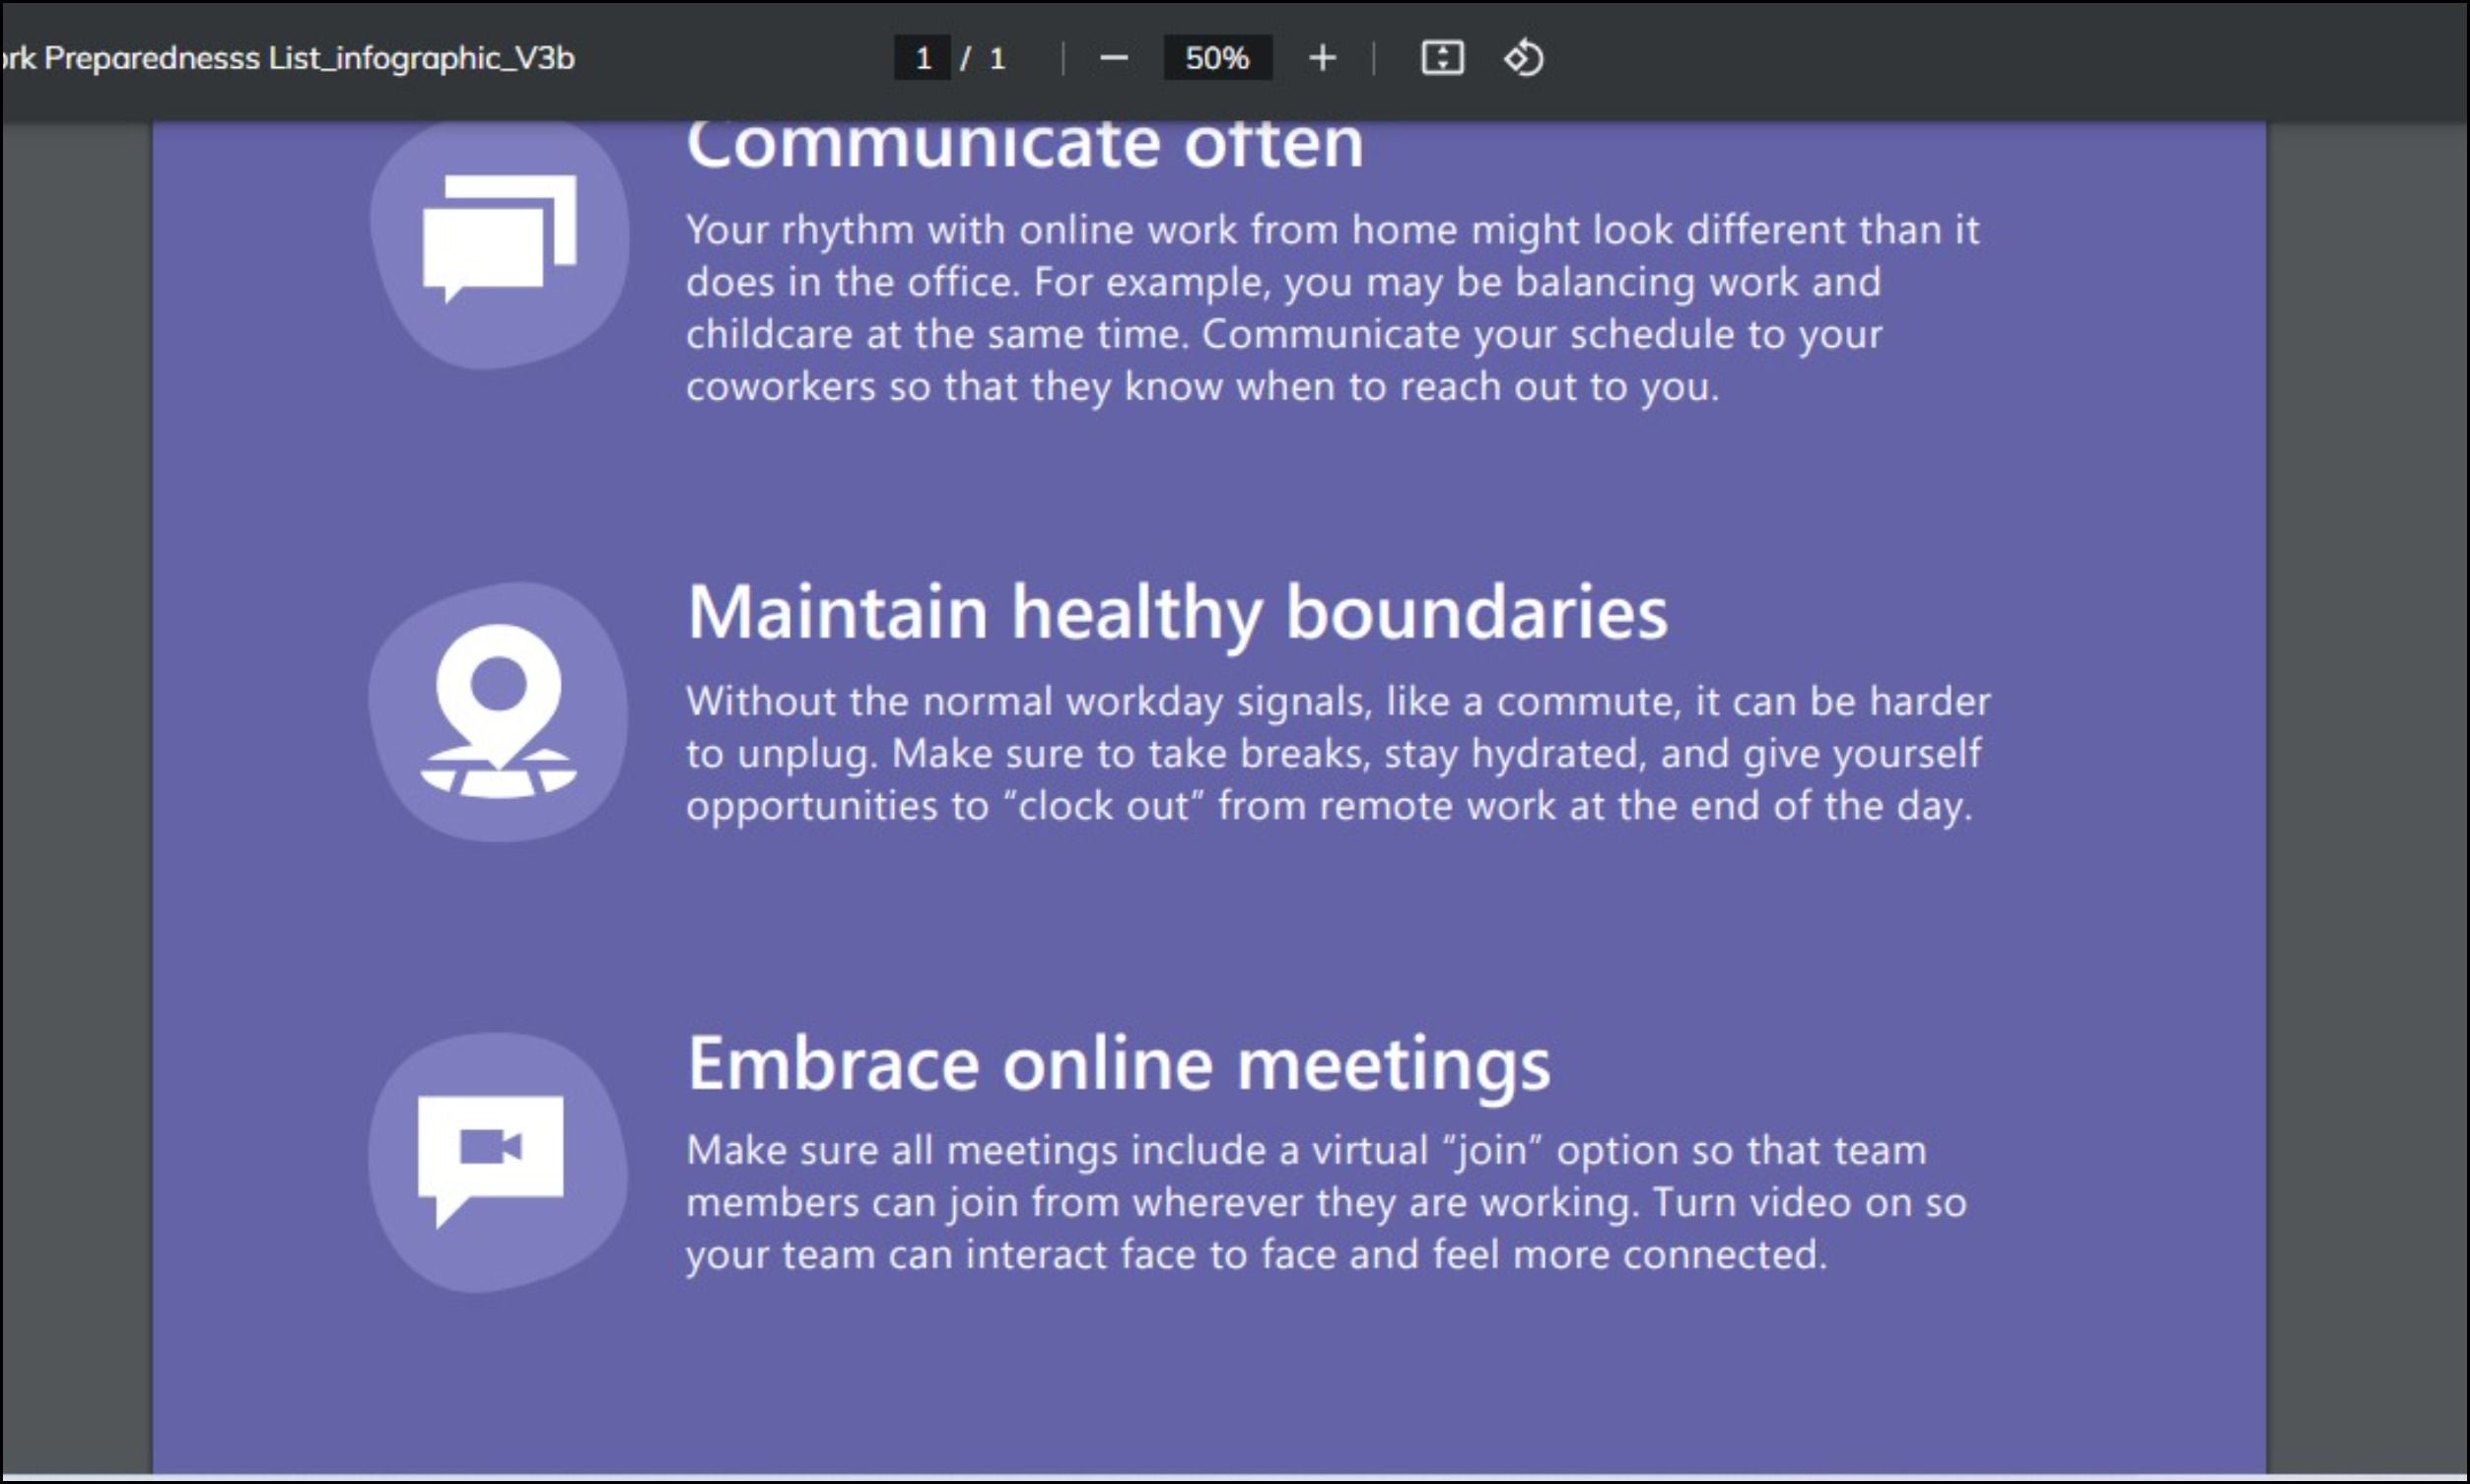 Remote work checklist by Microsoft